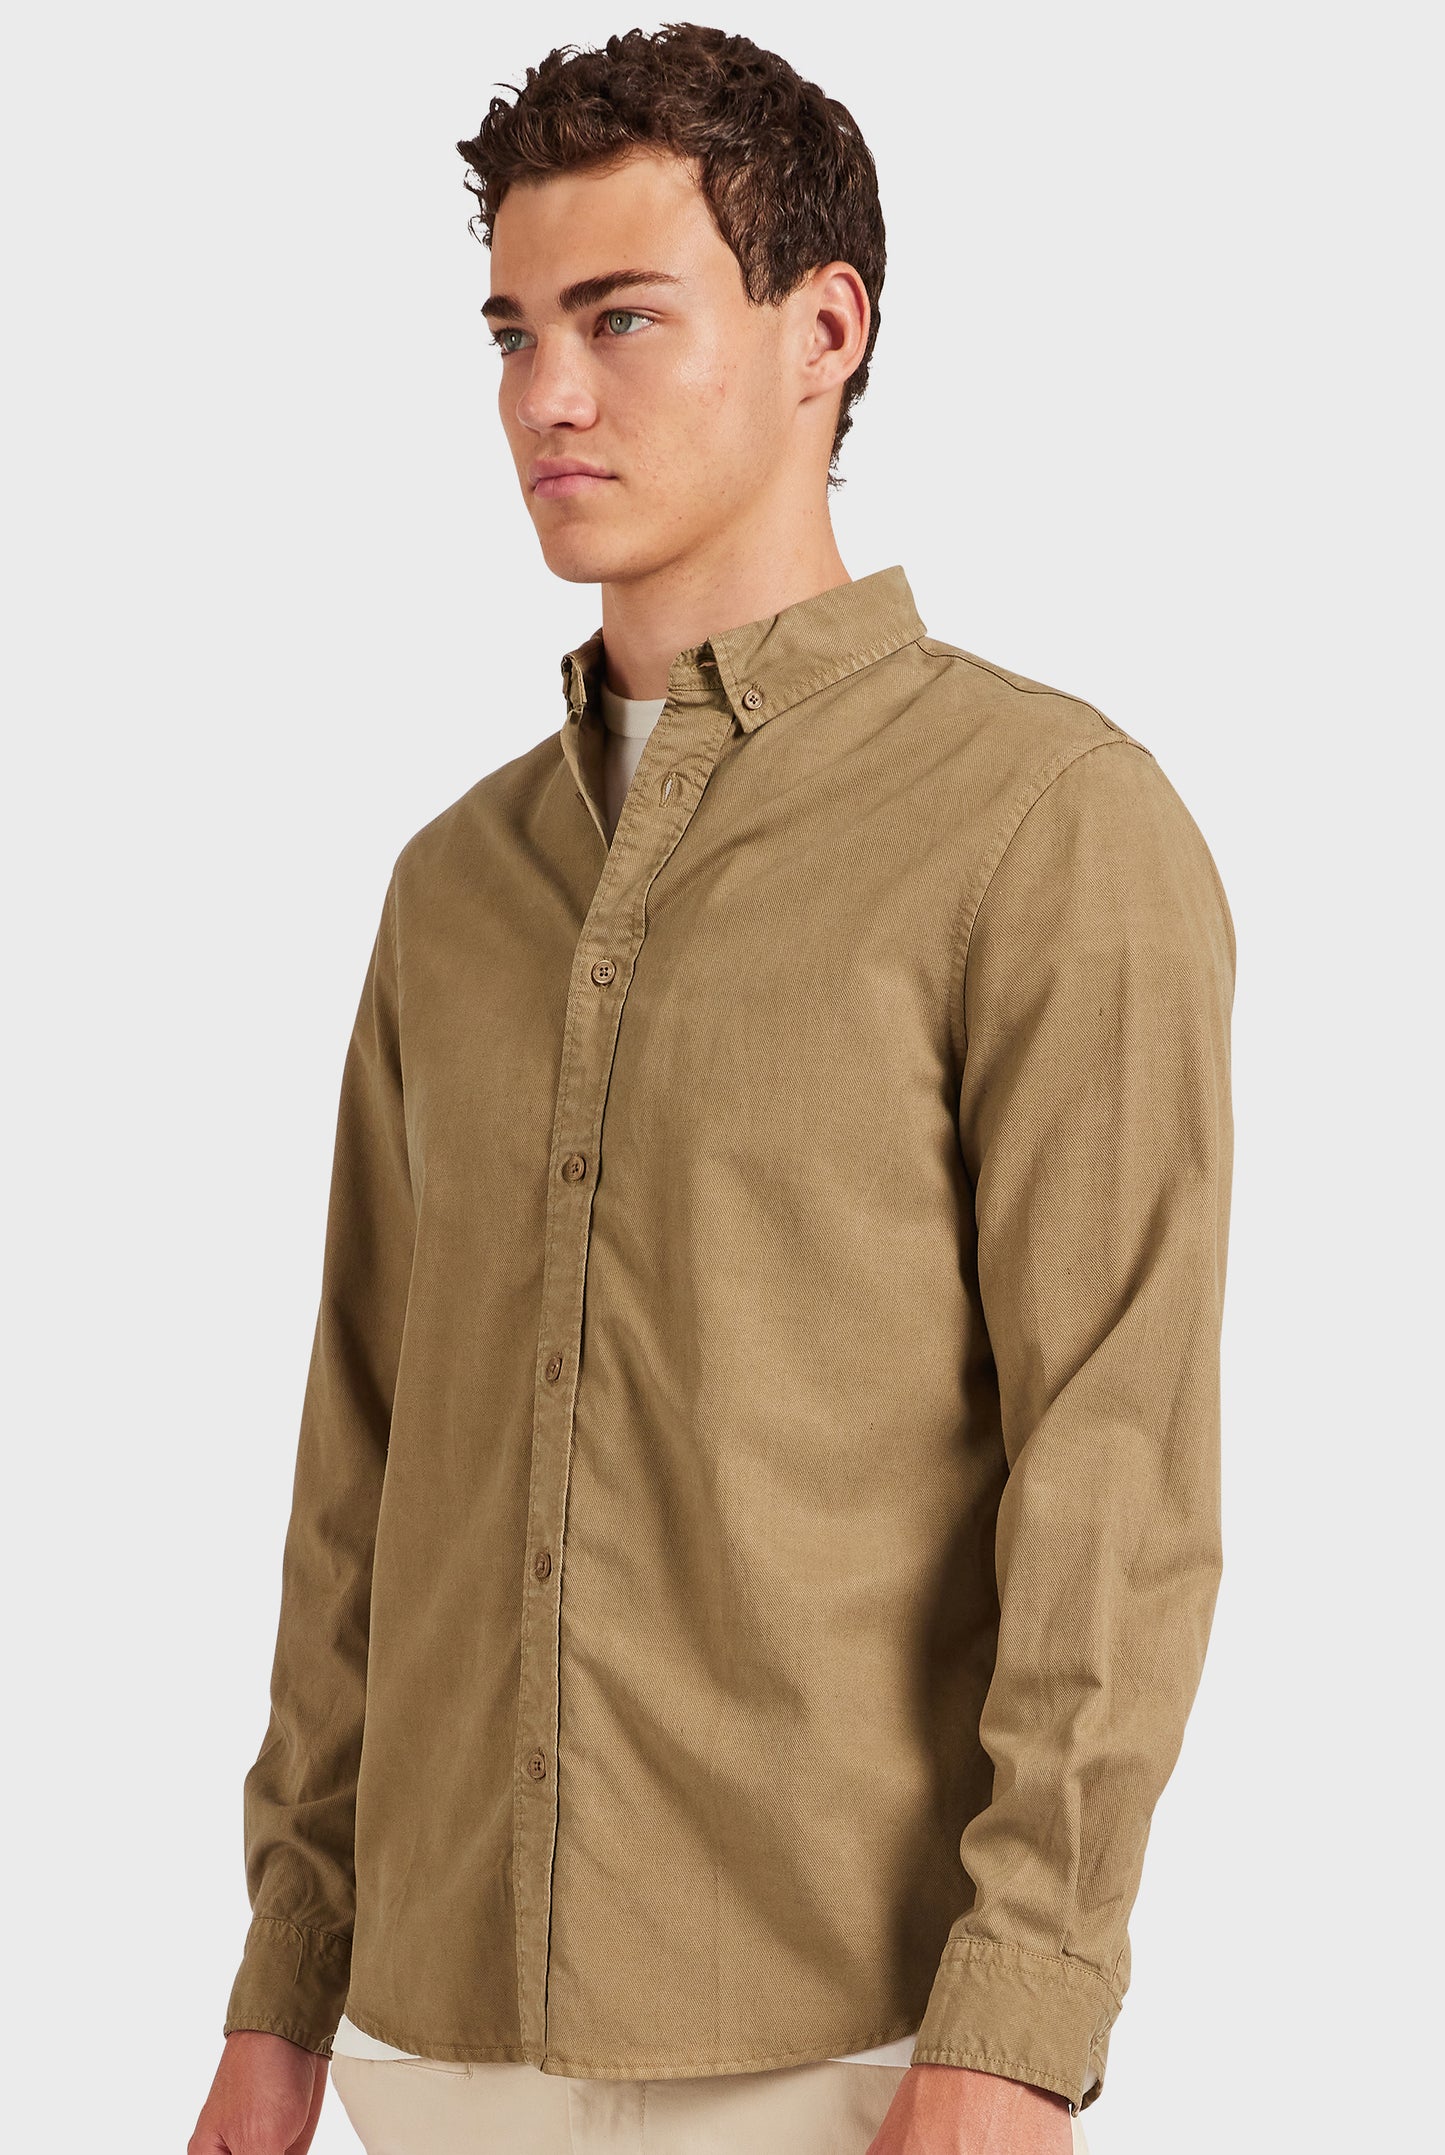 Academy Brand Cary Shirt Dune Green